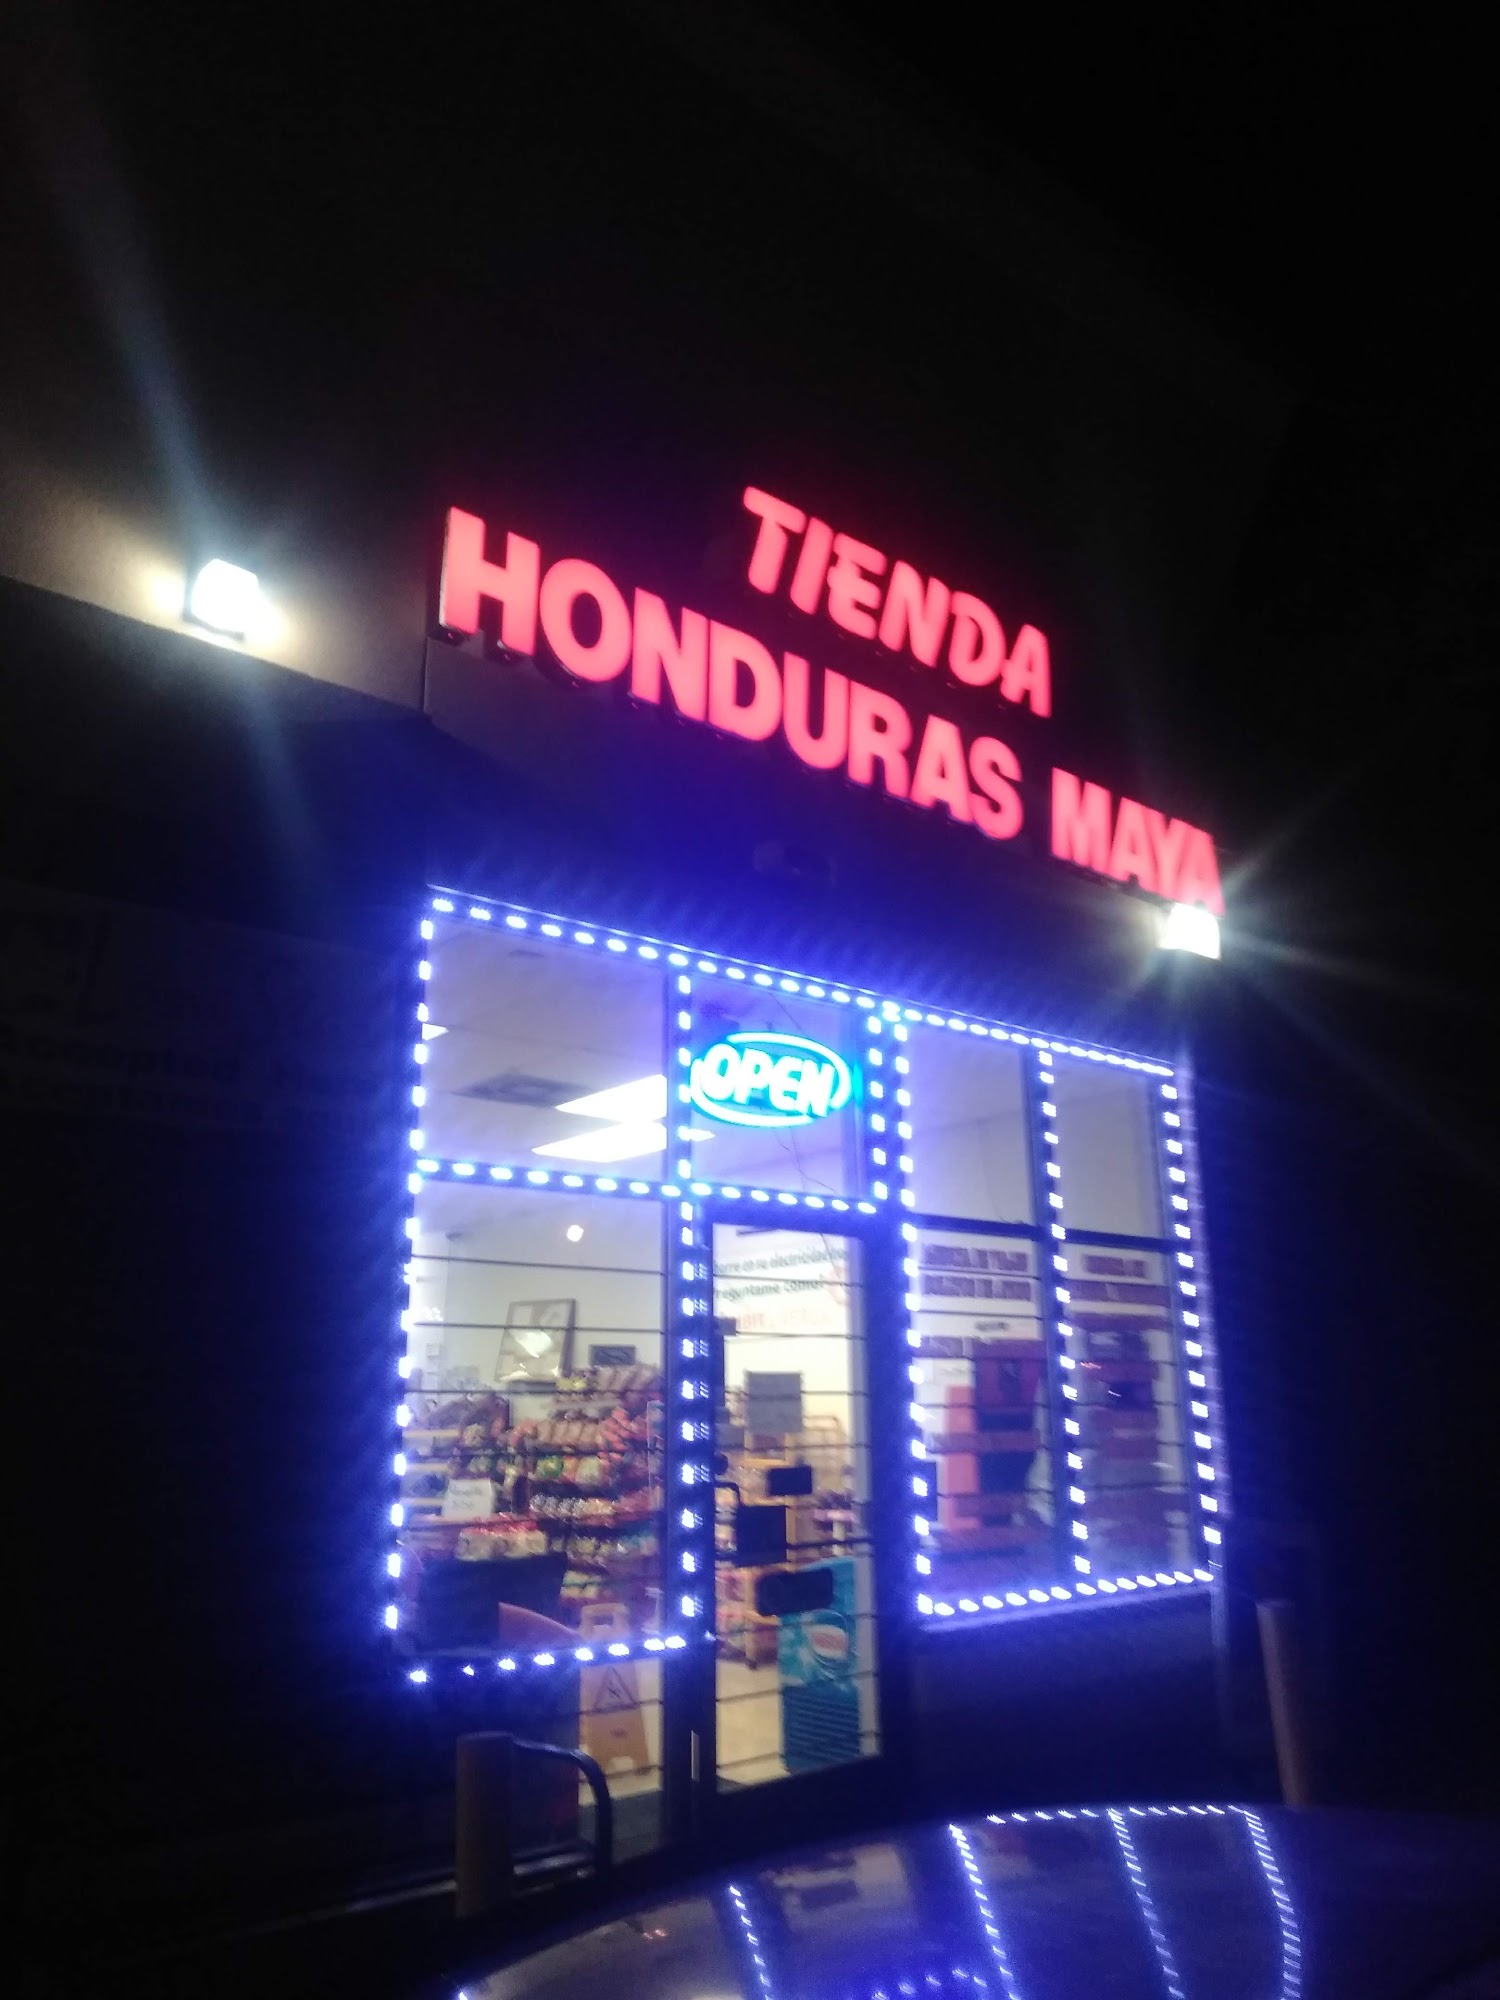 Tienda Honduras Maya